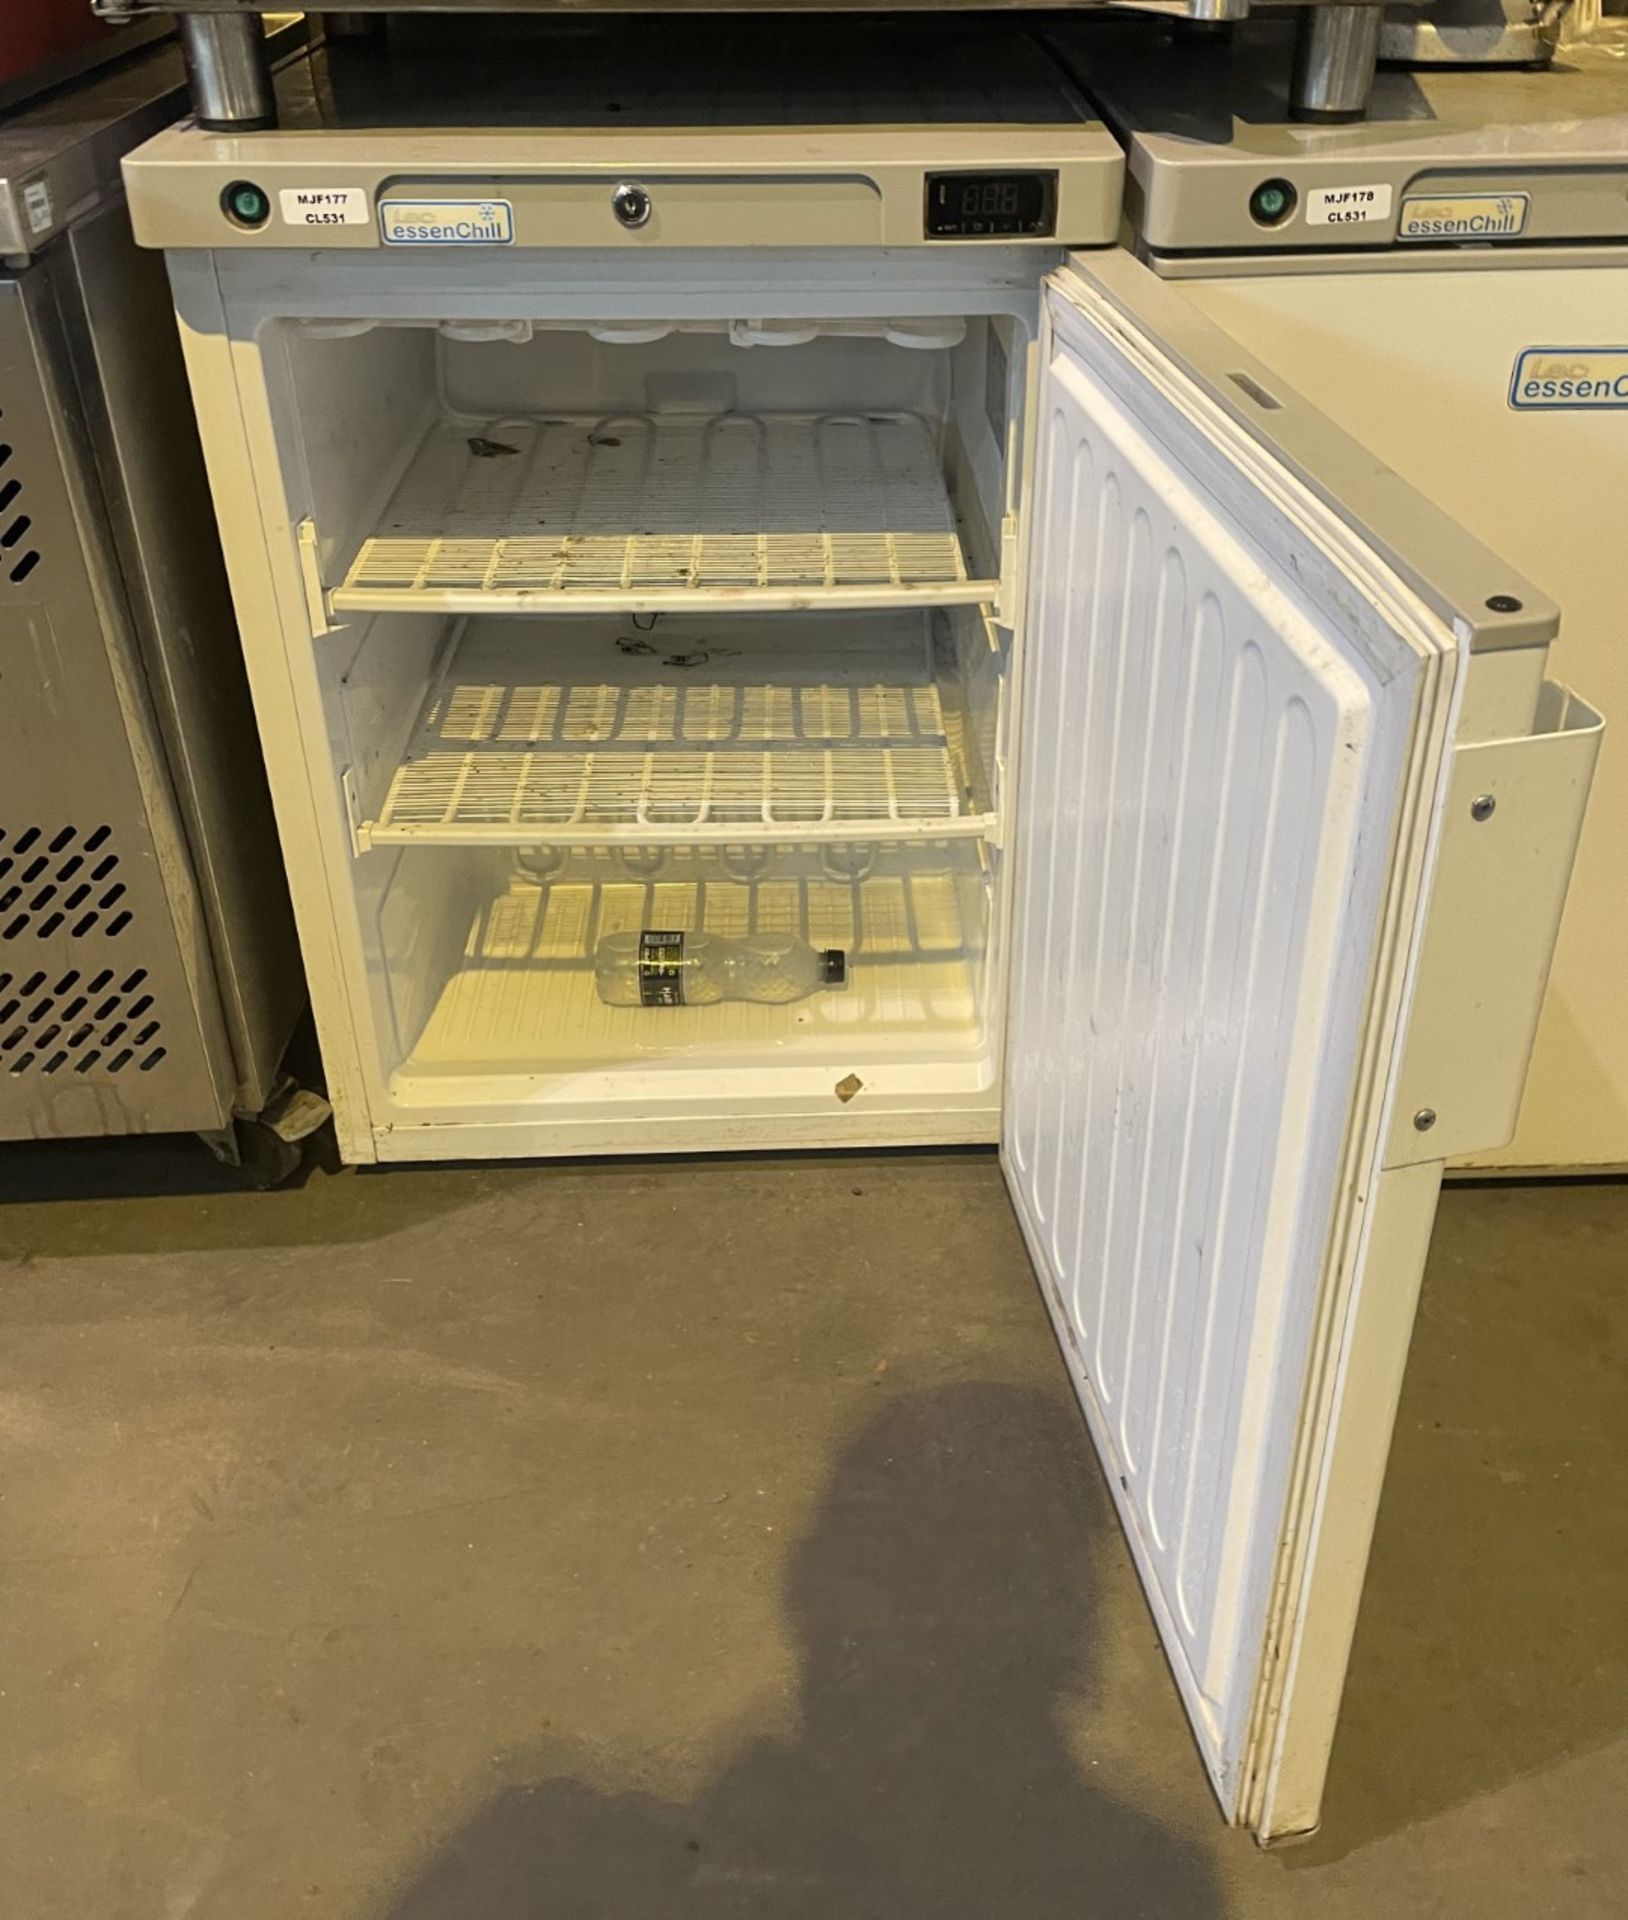 1 x LEC EssenChill Undercounter Commercial Freezer - Model BFS200W - Dimensions: H84 x W60 x D67 cms - Image 3 of 4